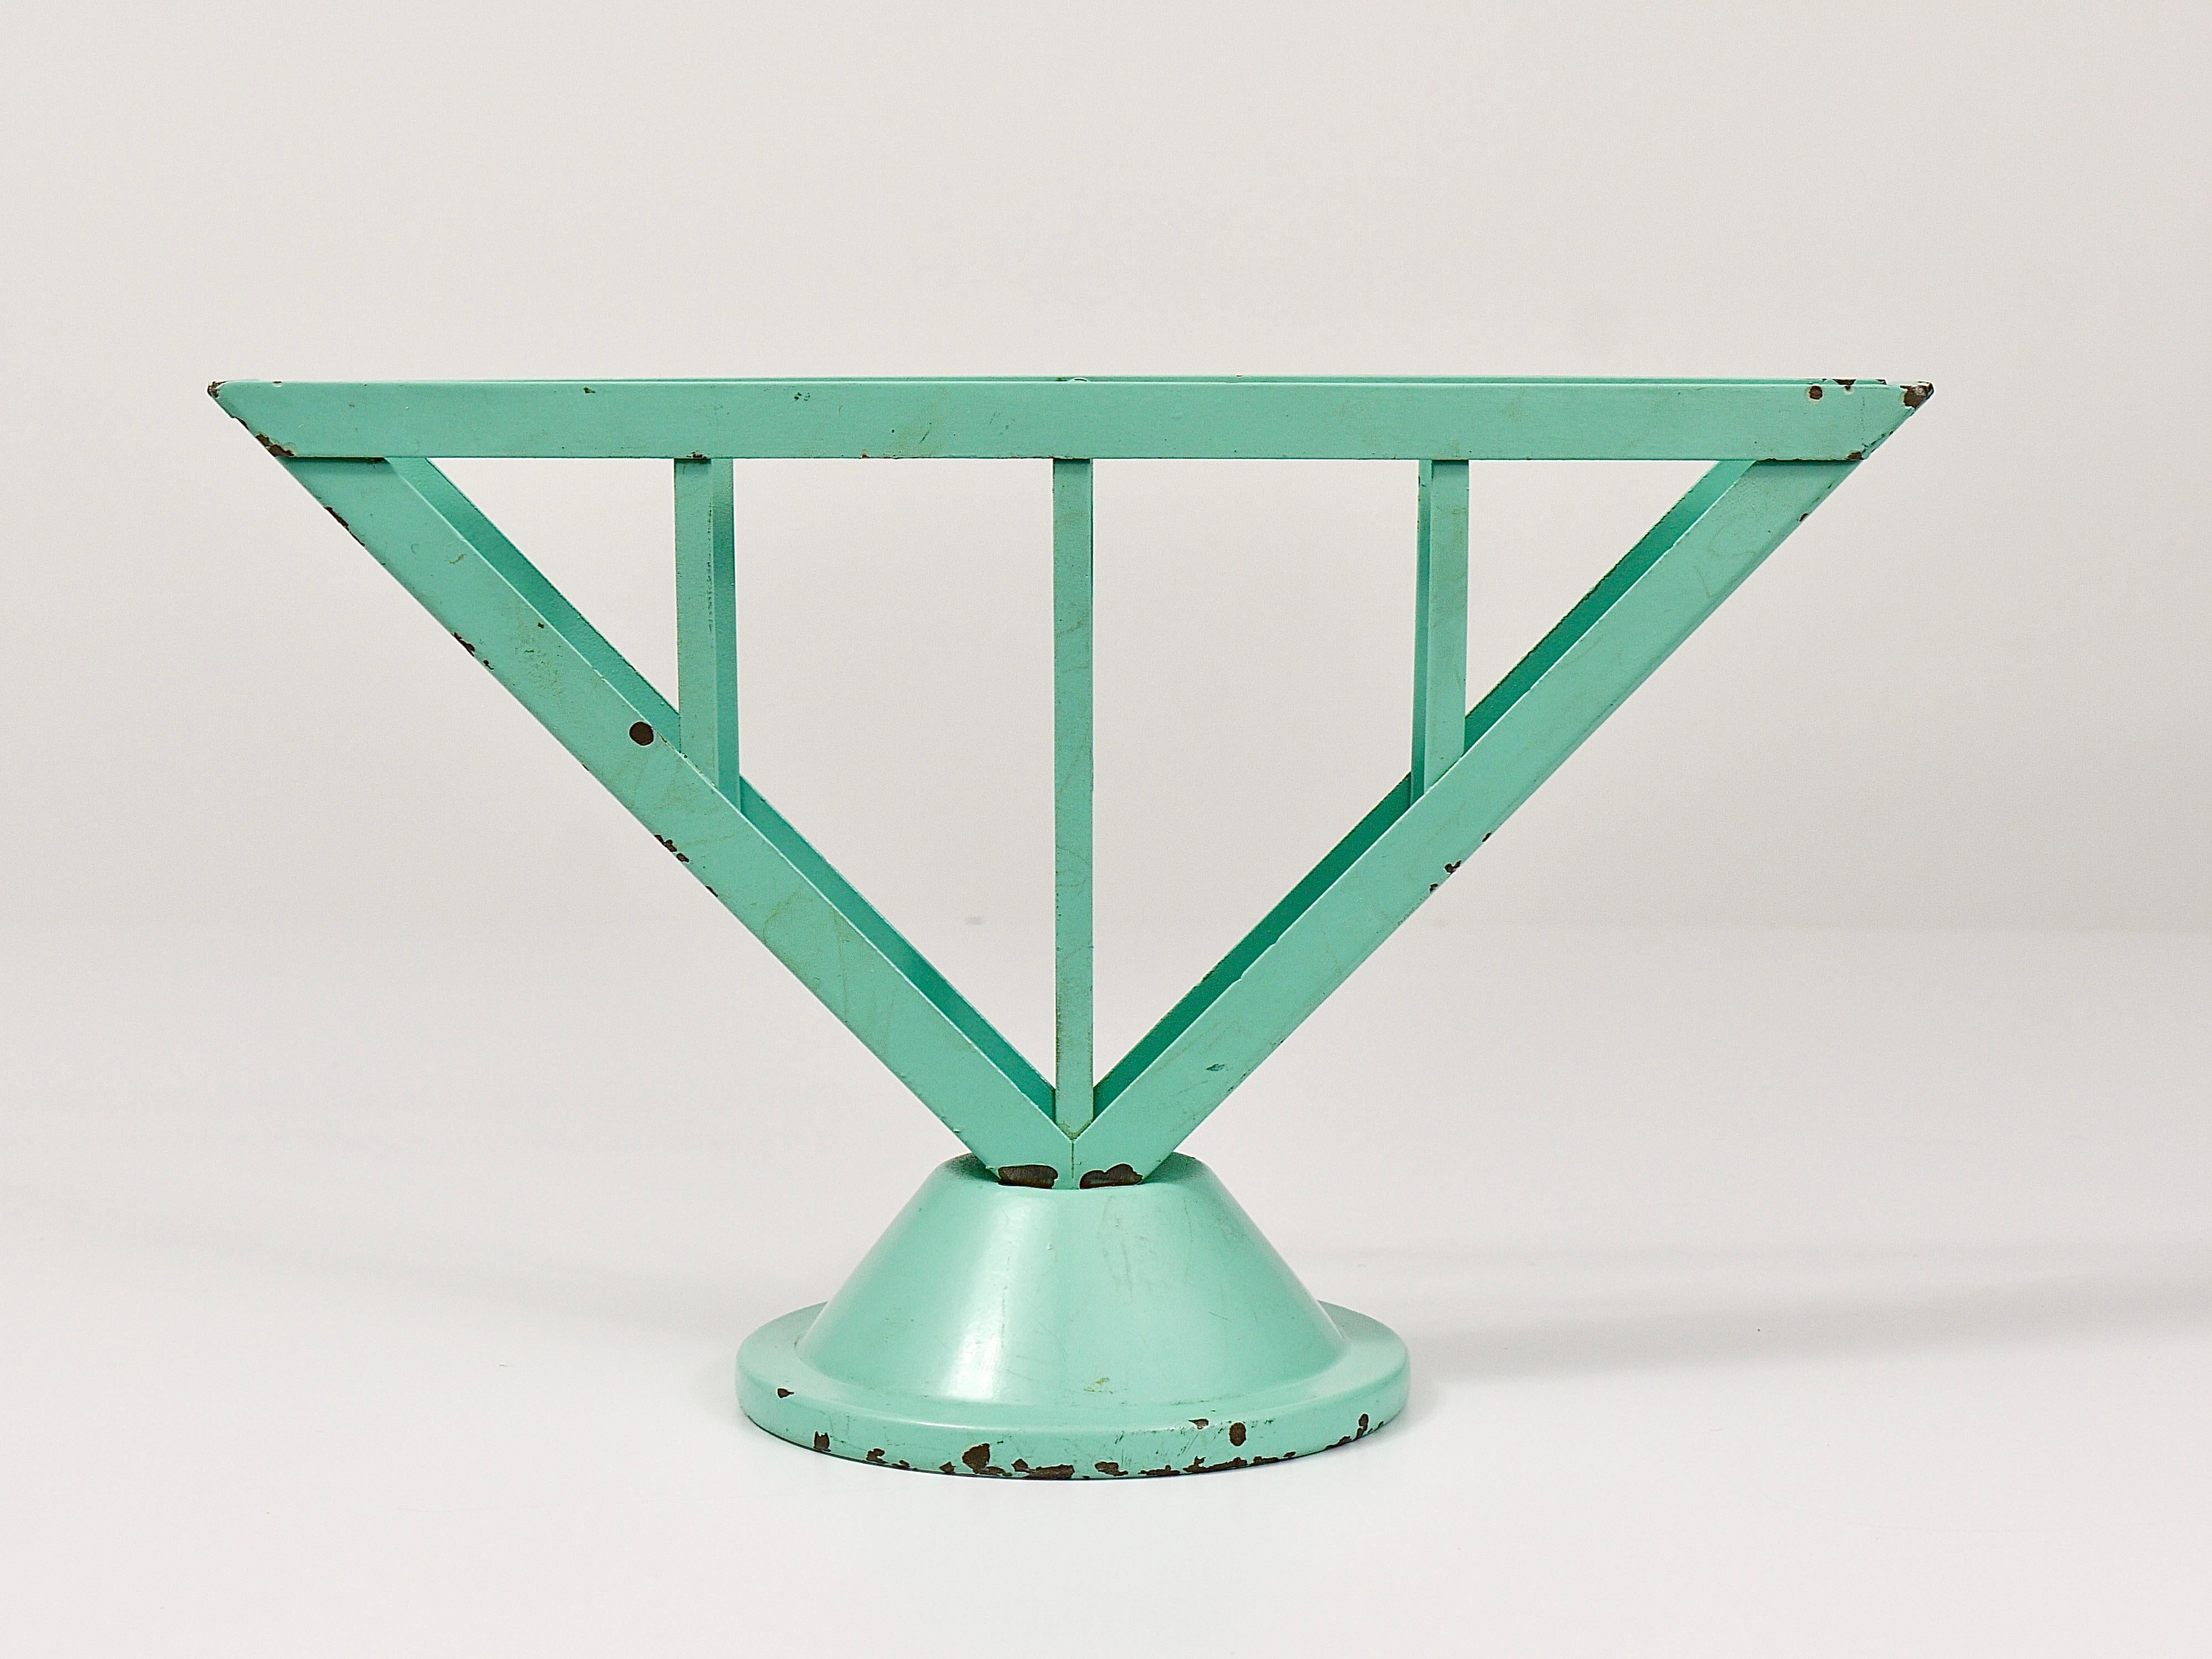 Decorative Green Marianne Brandt Avantgarde Bauhaus Napkin Holder, Ruppel, 1930s For Sale 3